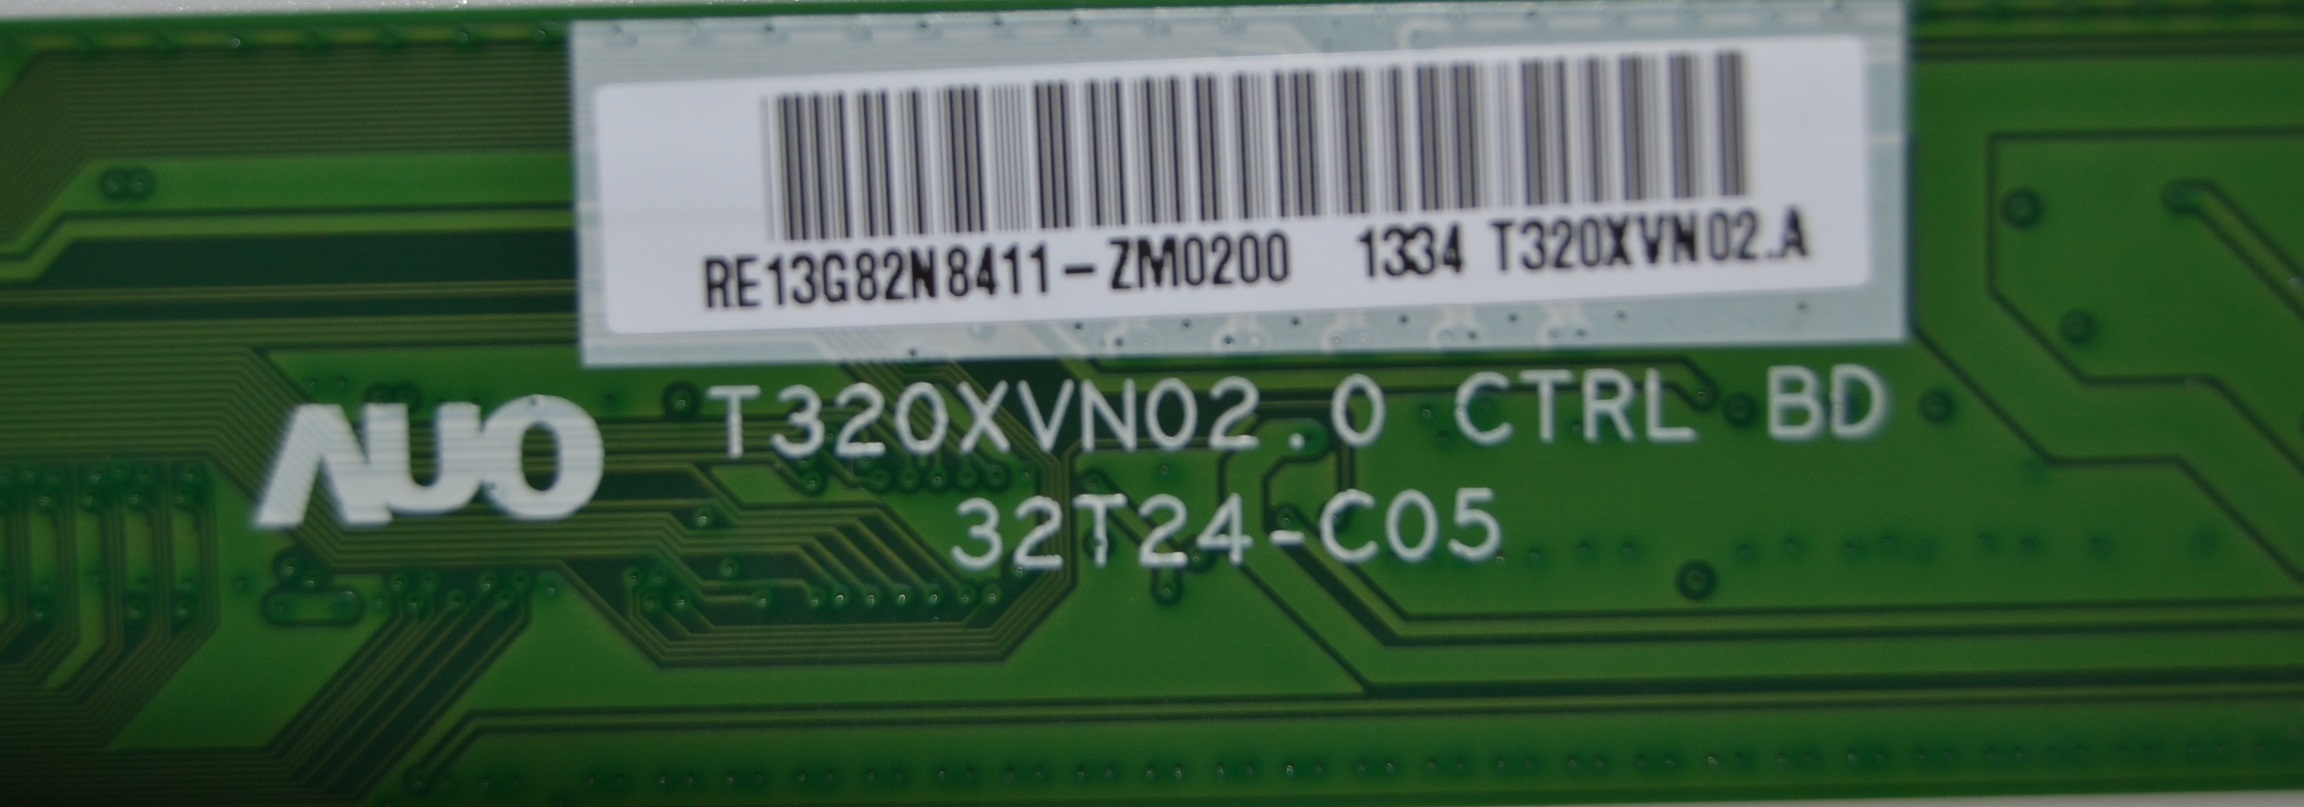 PAN/32INC/AUO/1 LCD РїР°РЅРµР» ,AUO,T320HVN02.A,CX315DLEDM,